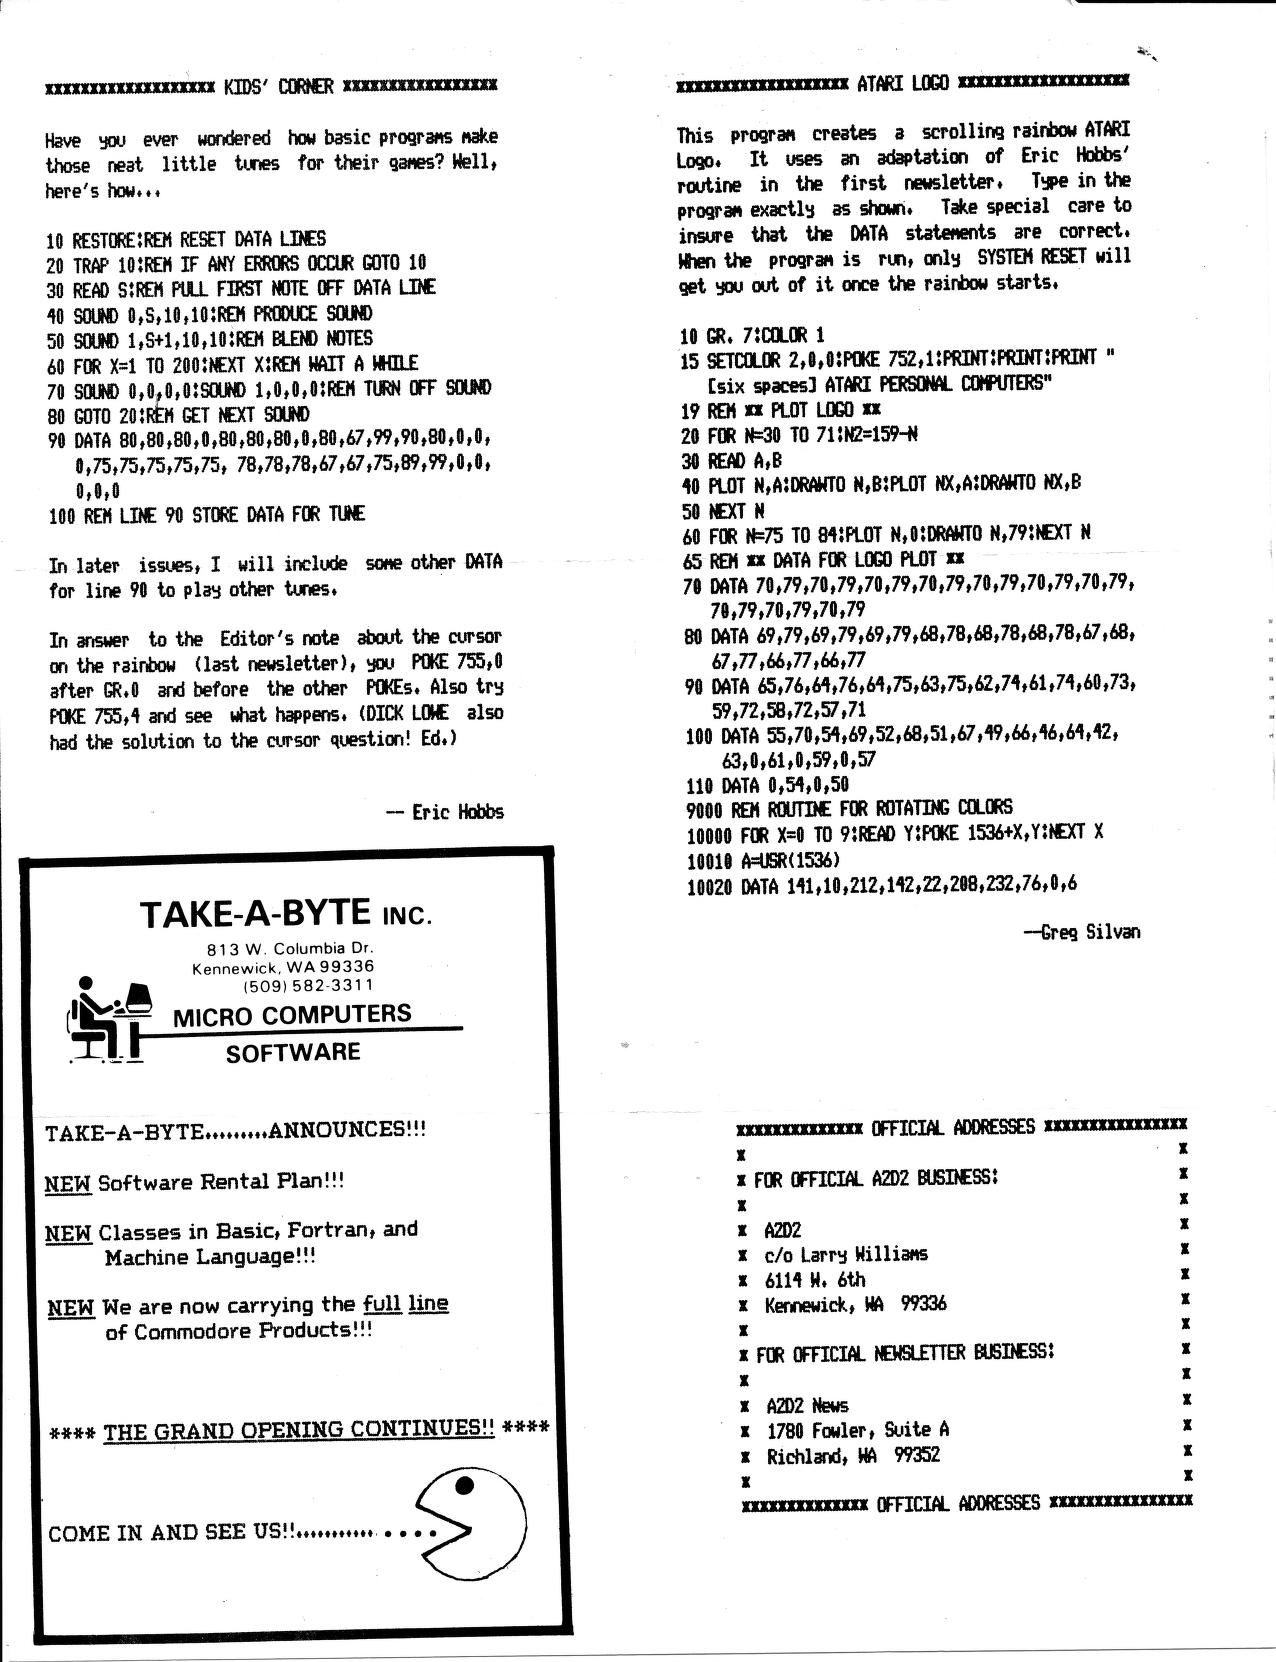 A2D2 Newsletter 1983-03 v1n2 : Tri-City Atari Computer Enthusiasts 